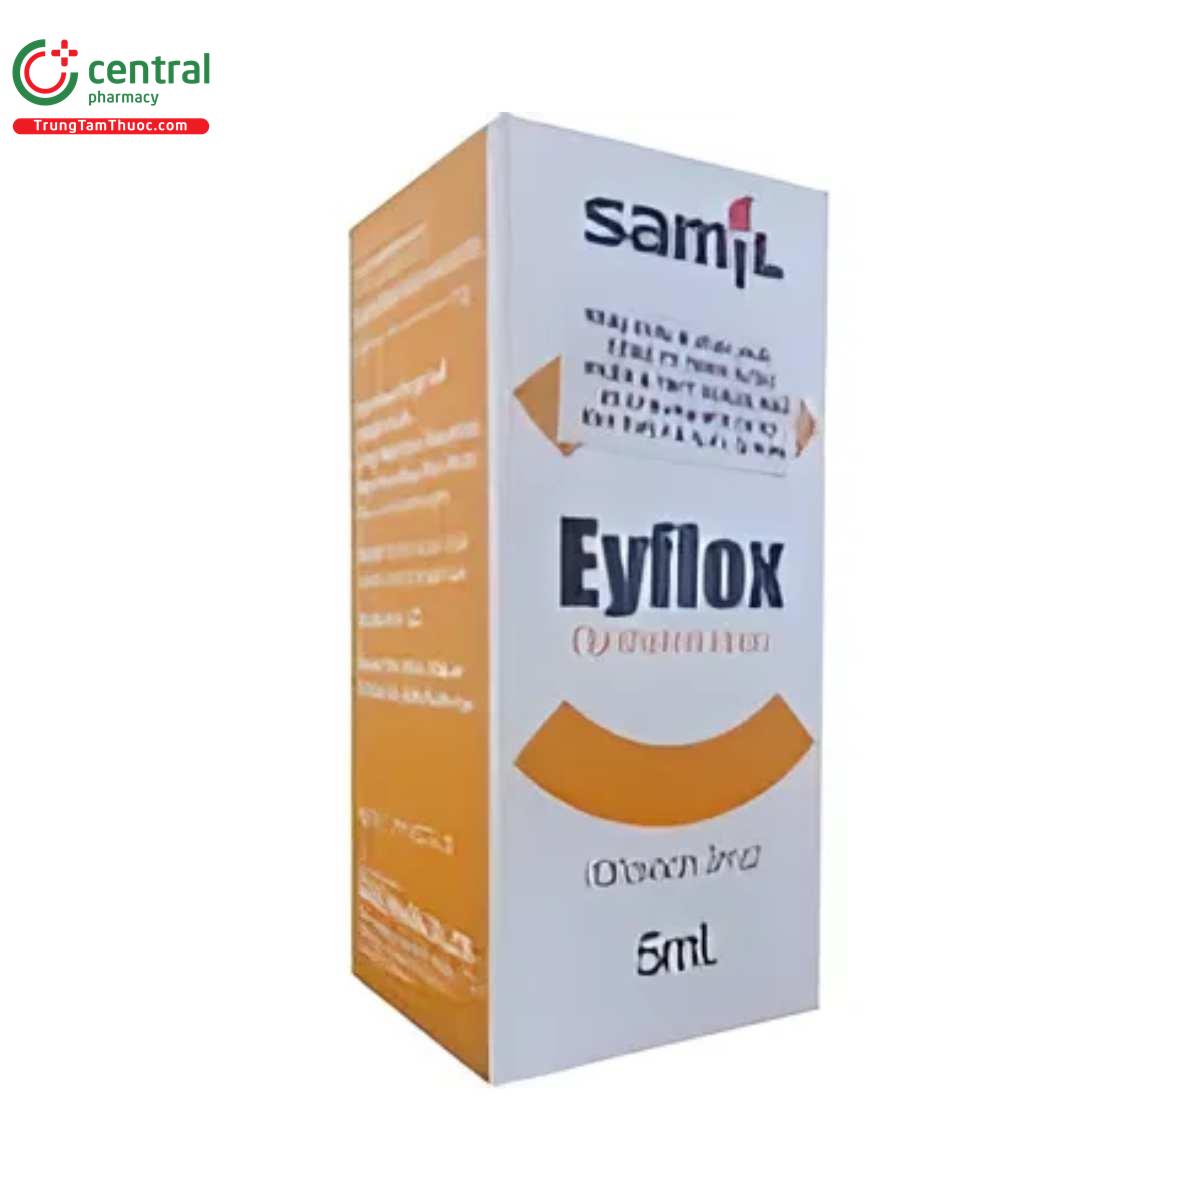 eyflox ophthalmic solution 5ml 4 I3671